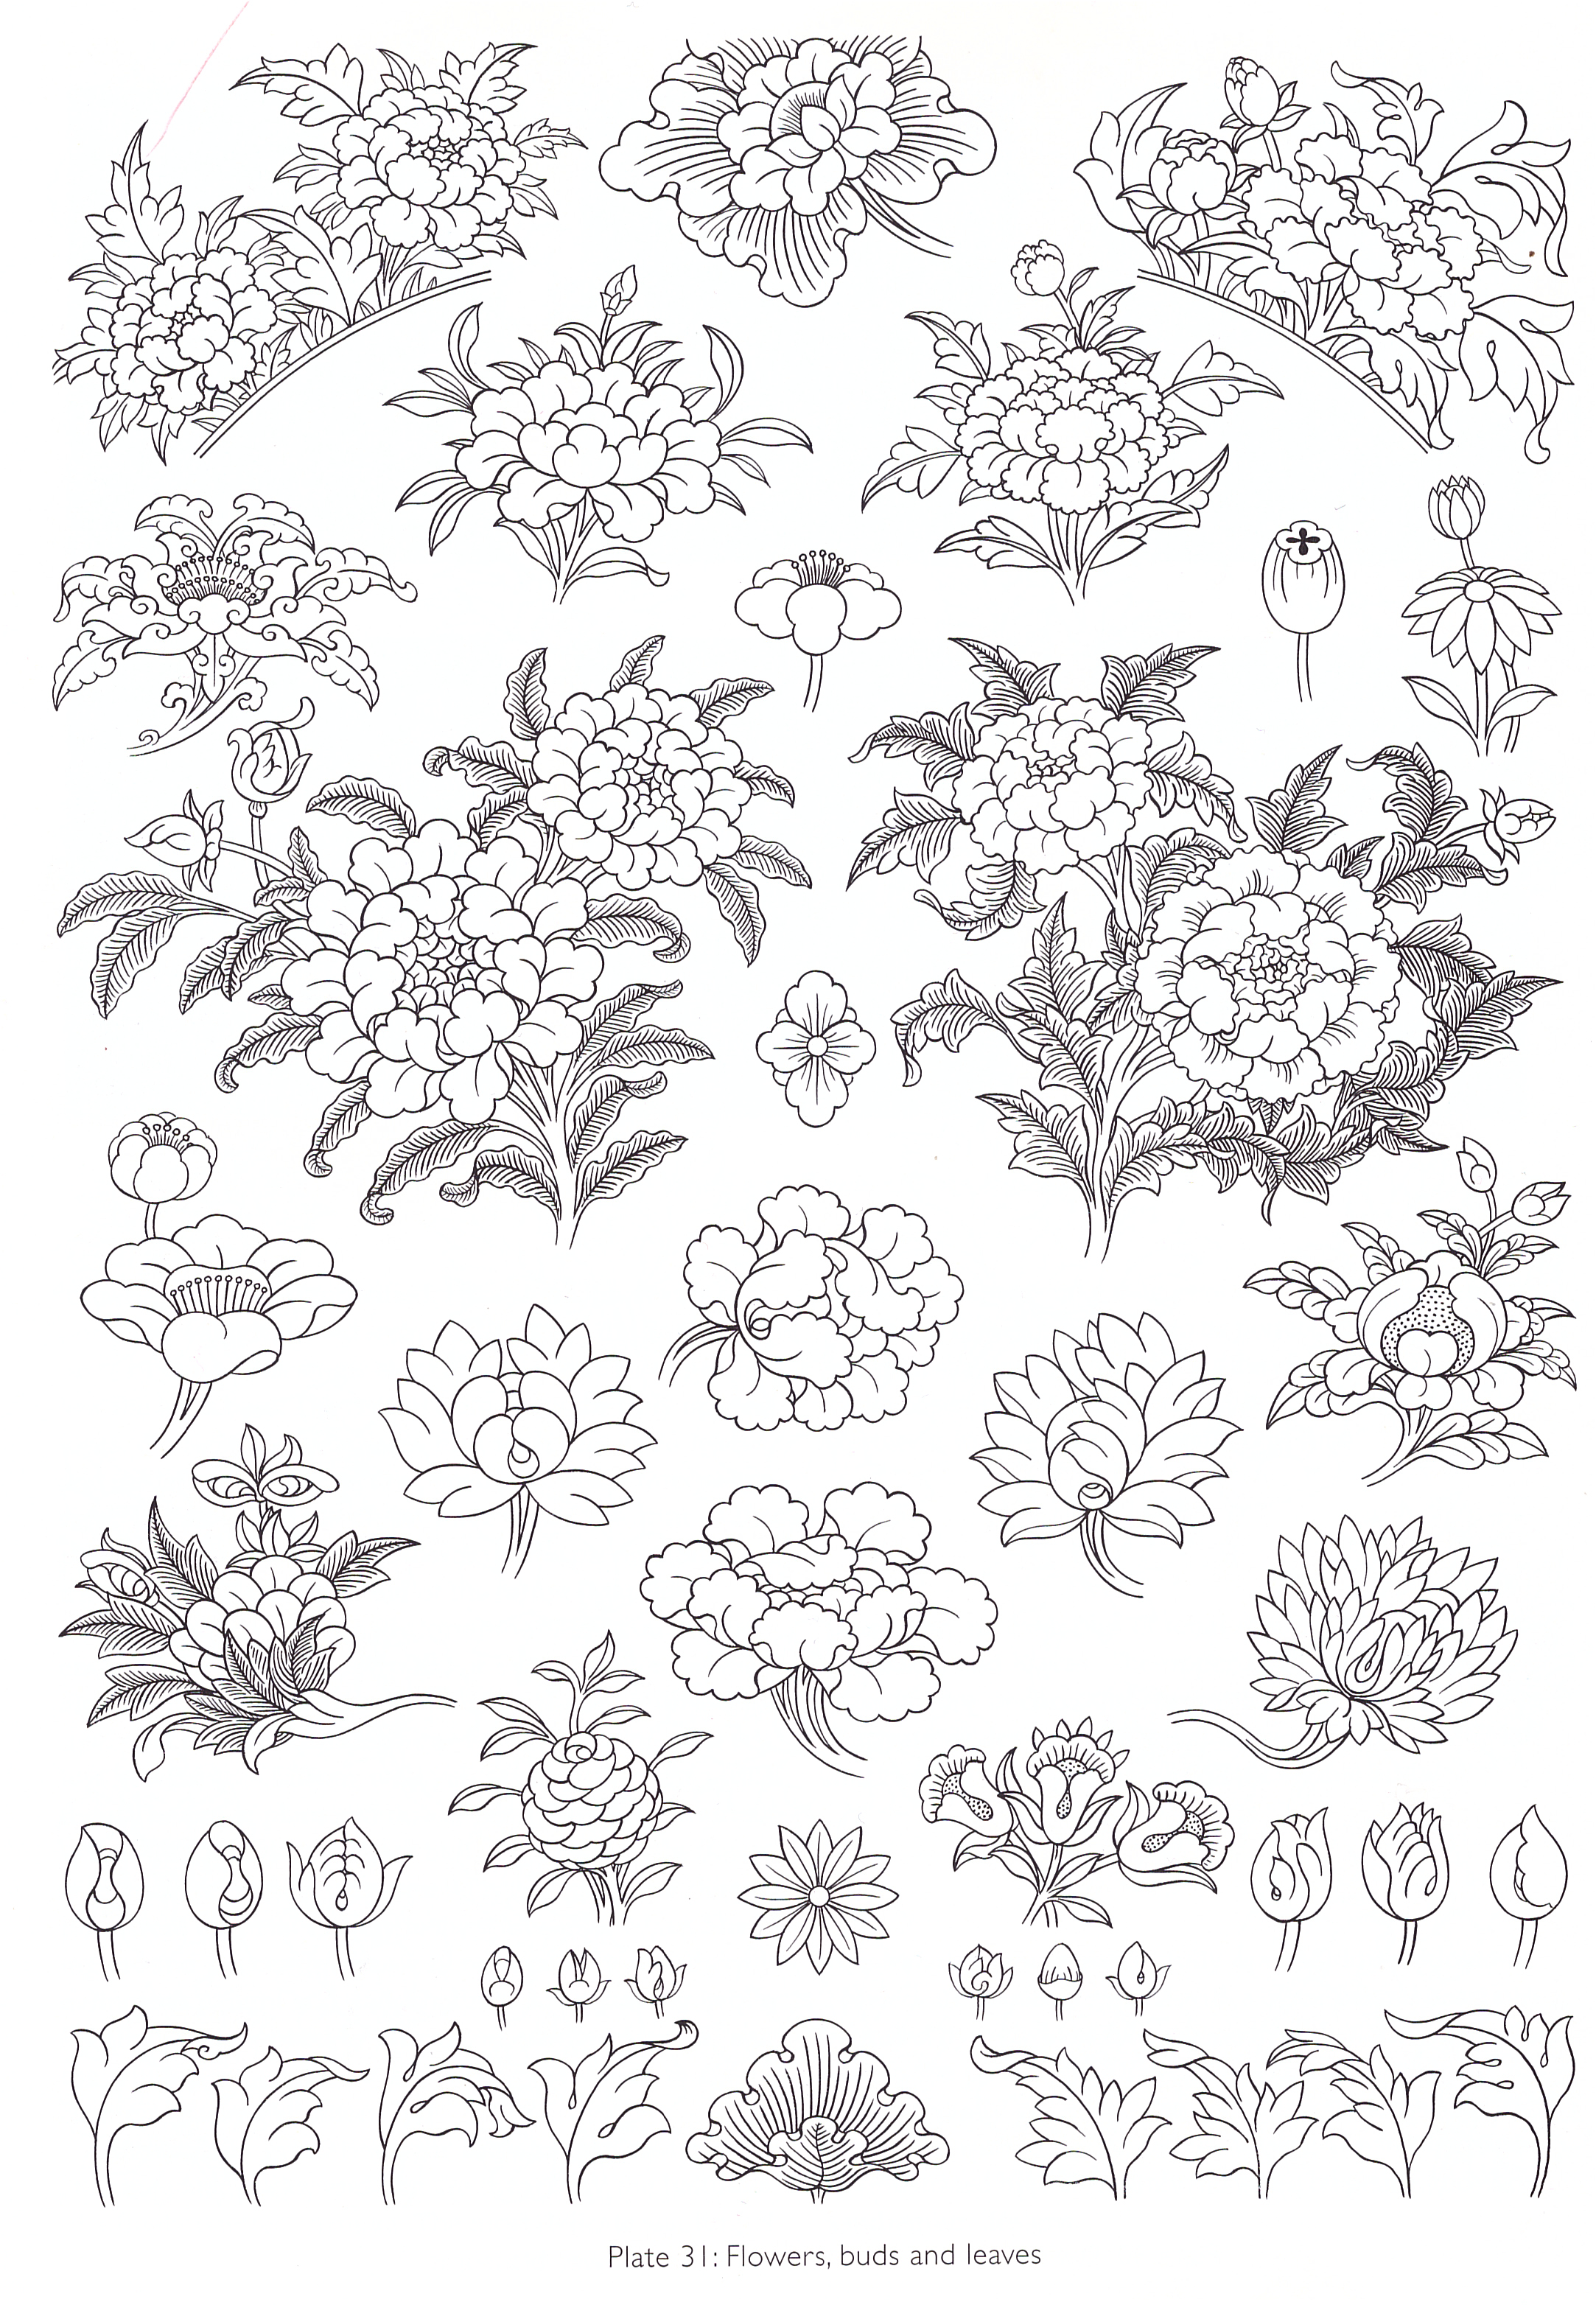 Robert Beer - planche 31 - fleurs, boutons et feuilles.jpeg